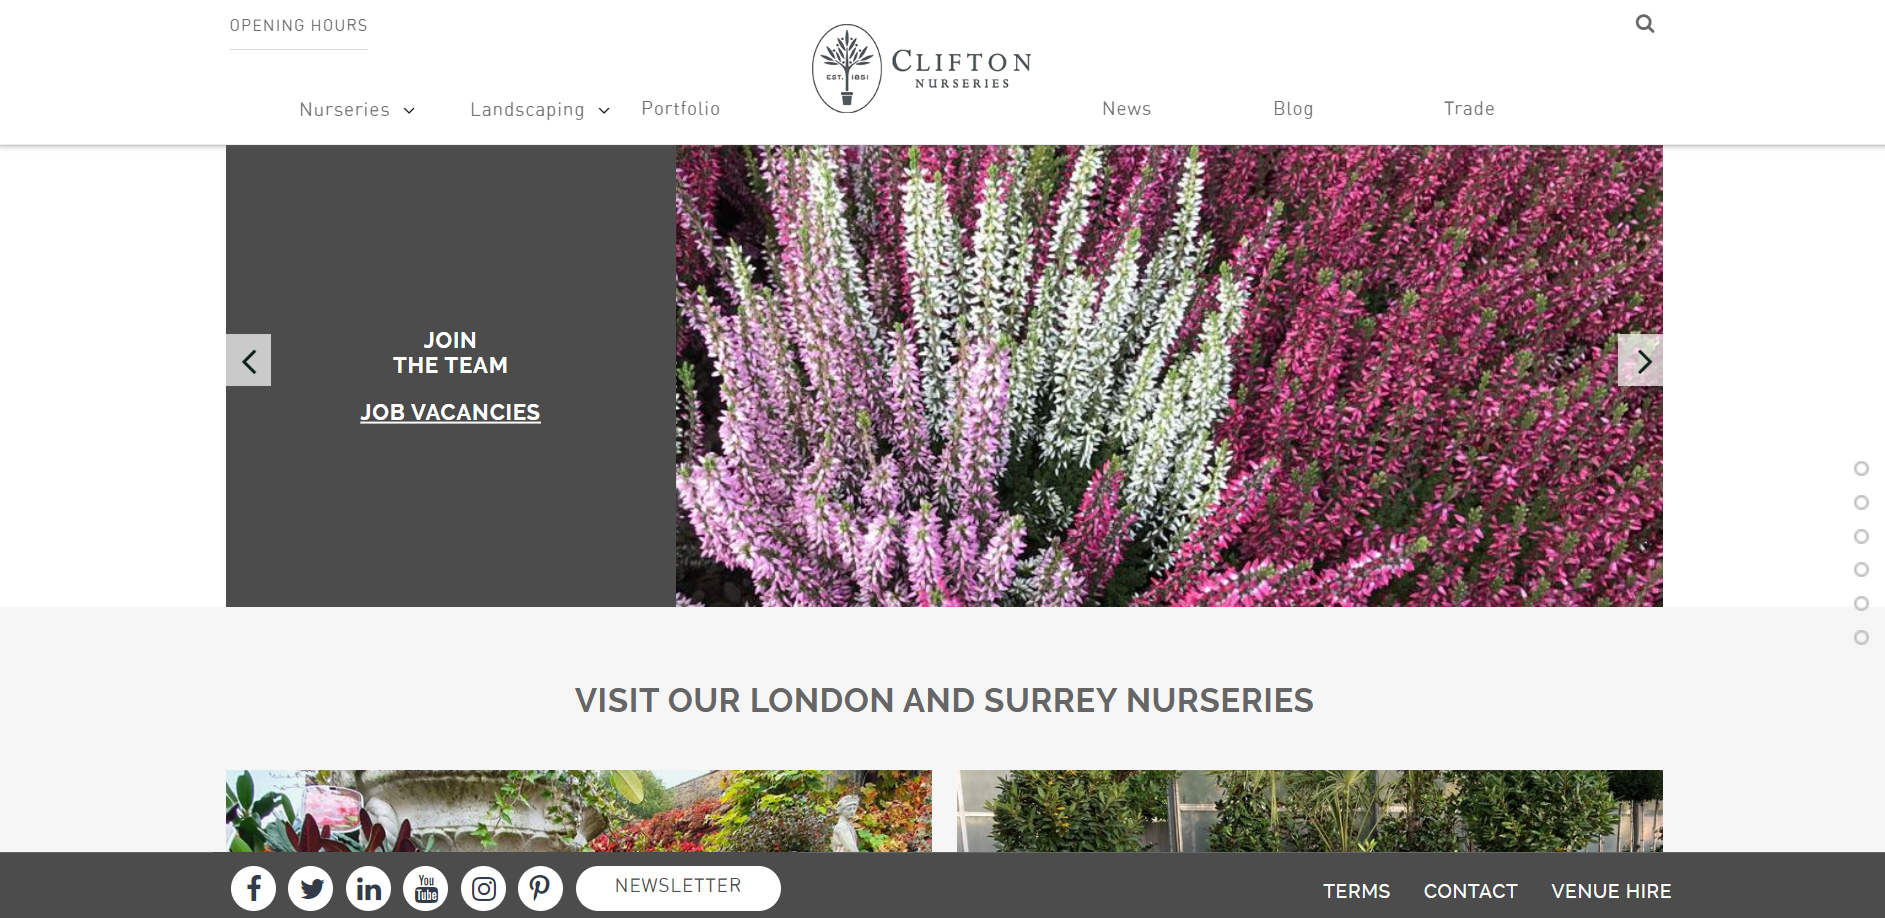 Clifton Nurseries